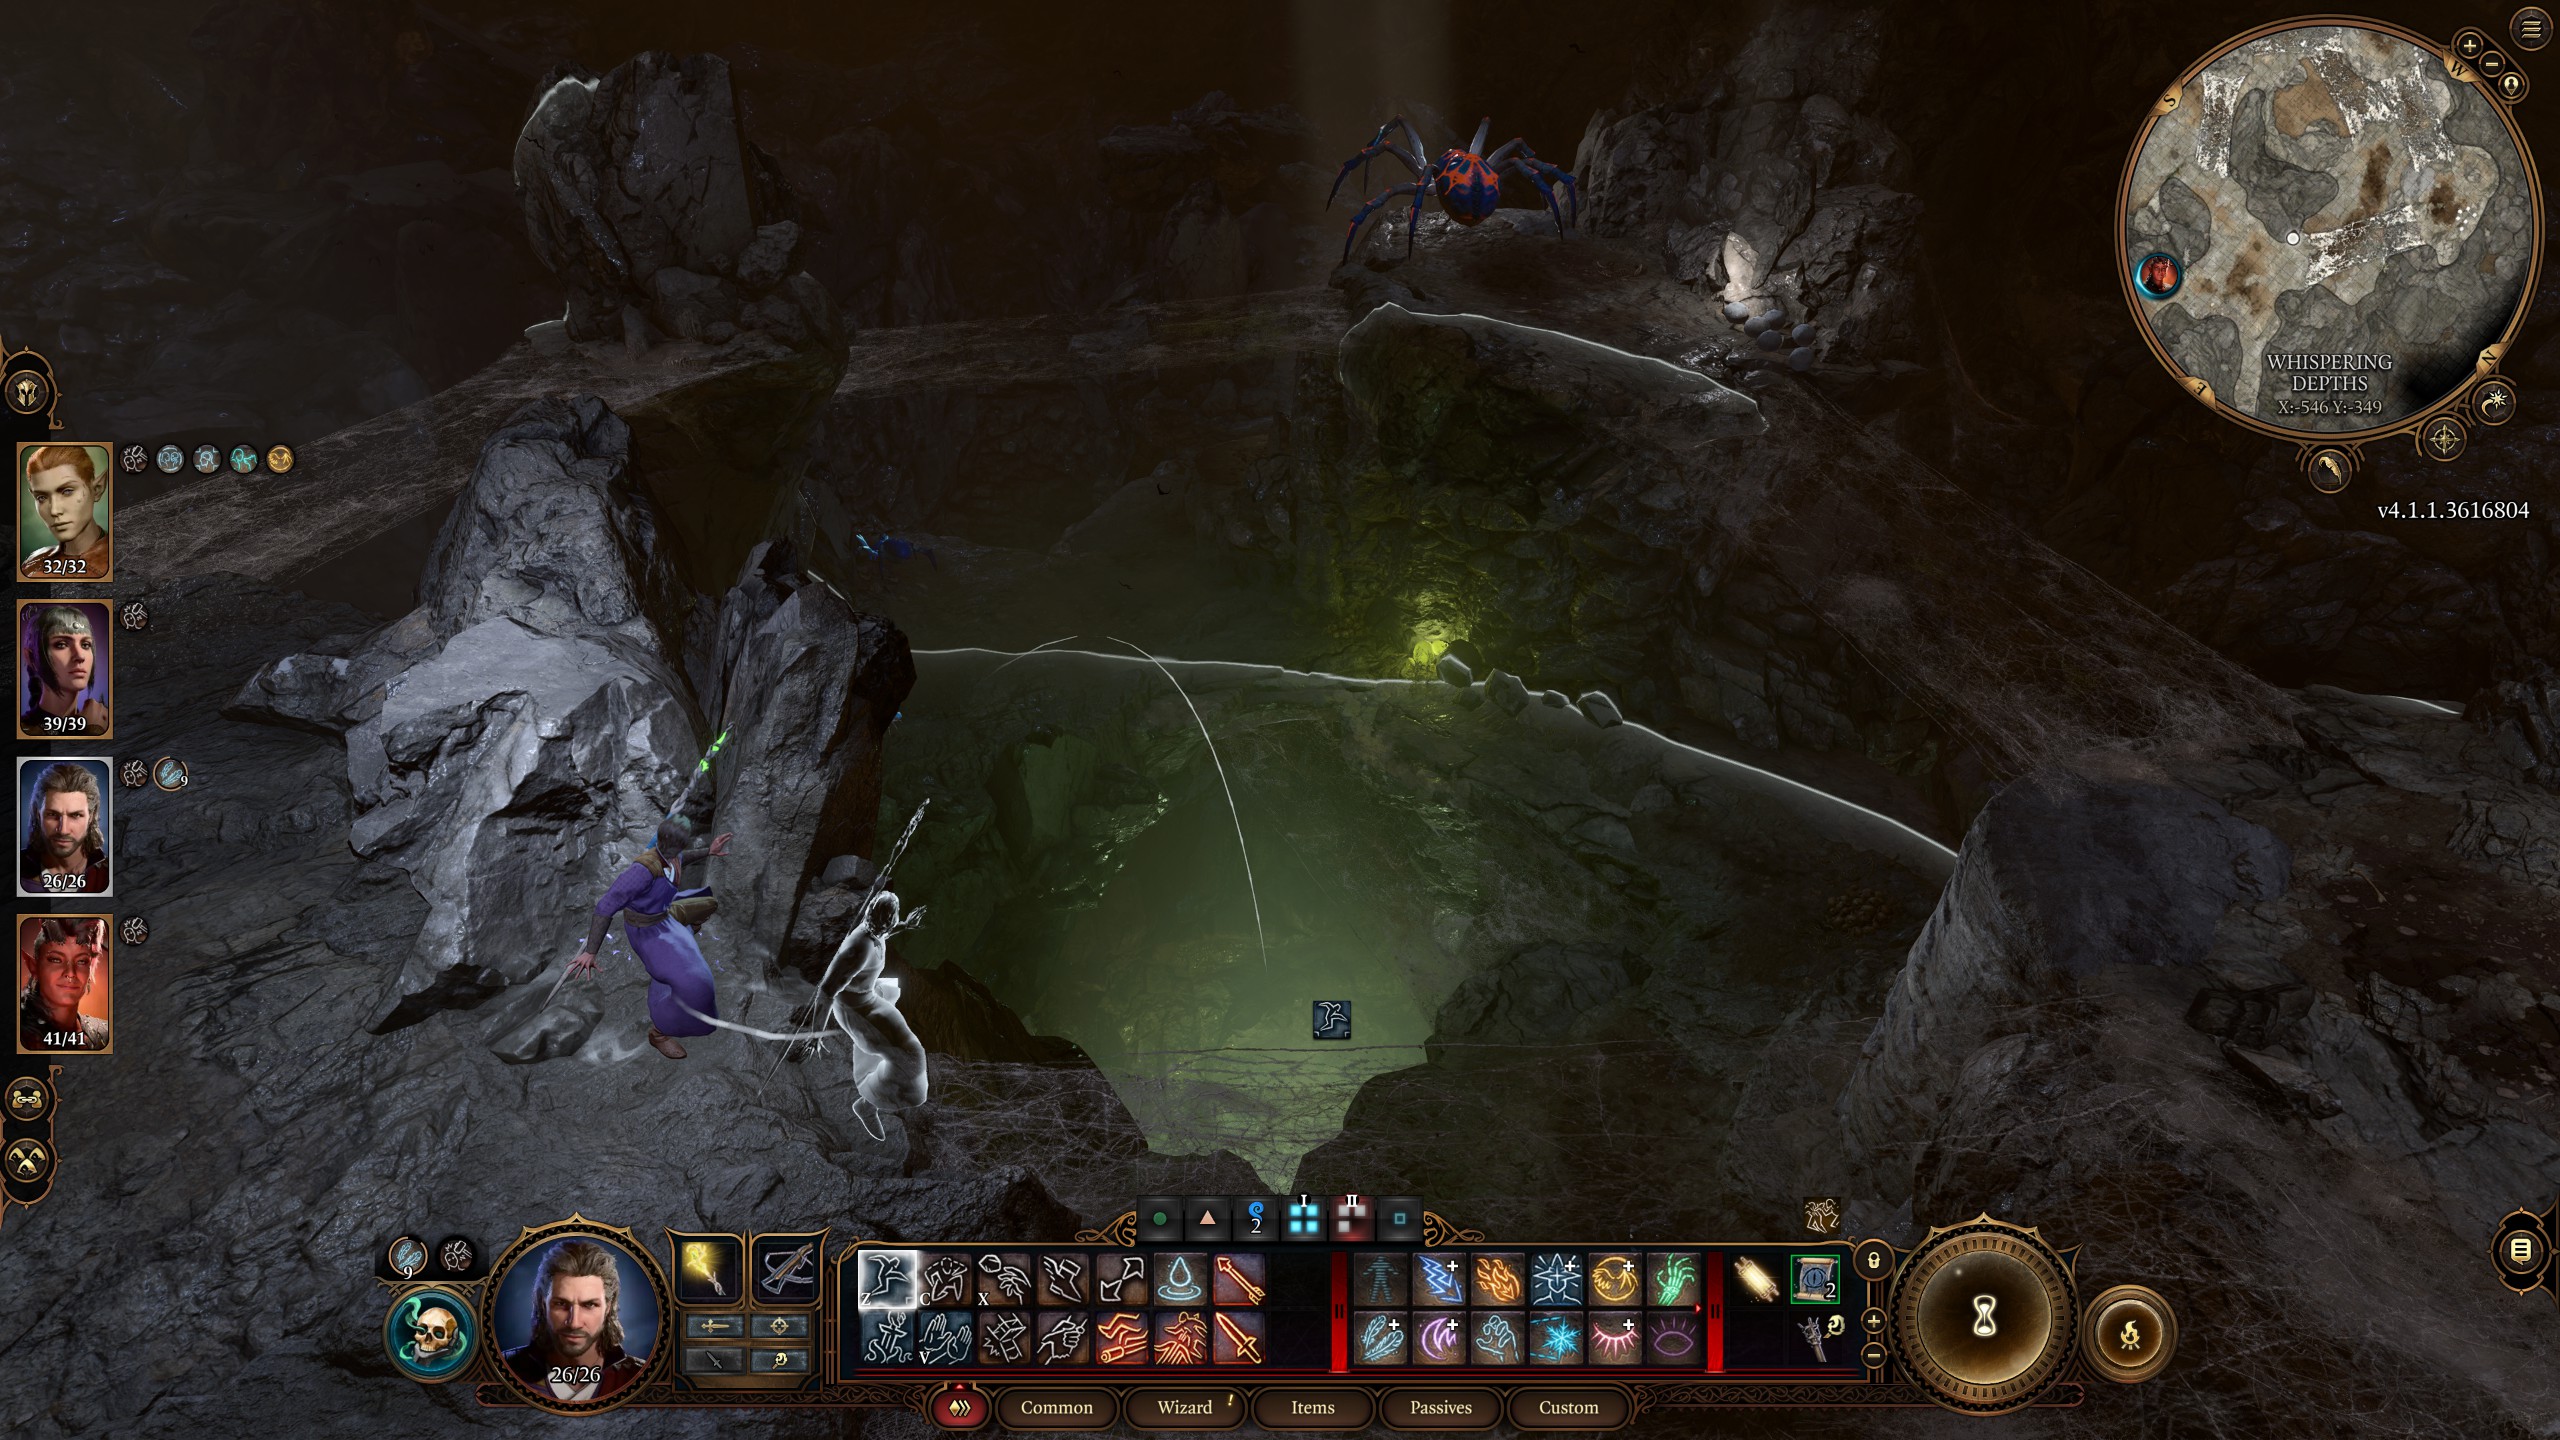 Baldur's Gate 3 Sussur Bark location - Gale jumps down a hole